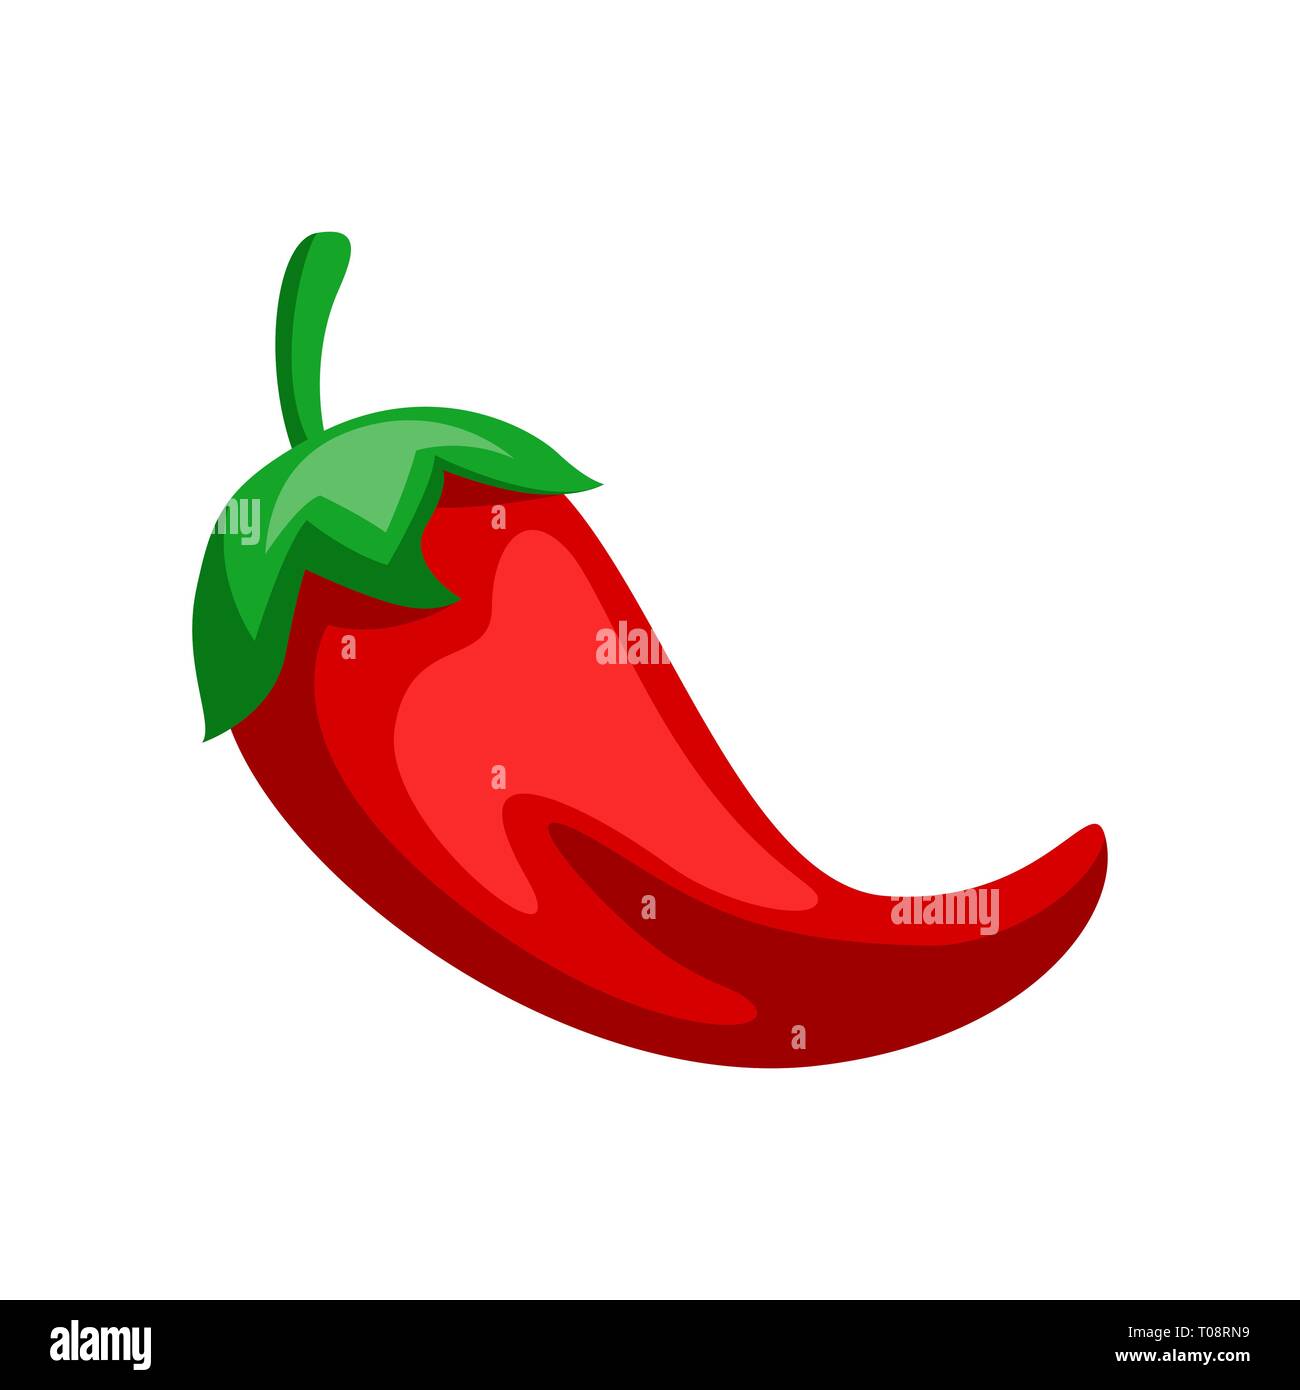 Illustration of red chili pepper. Stock Vector